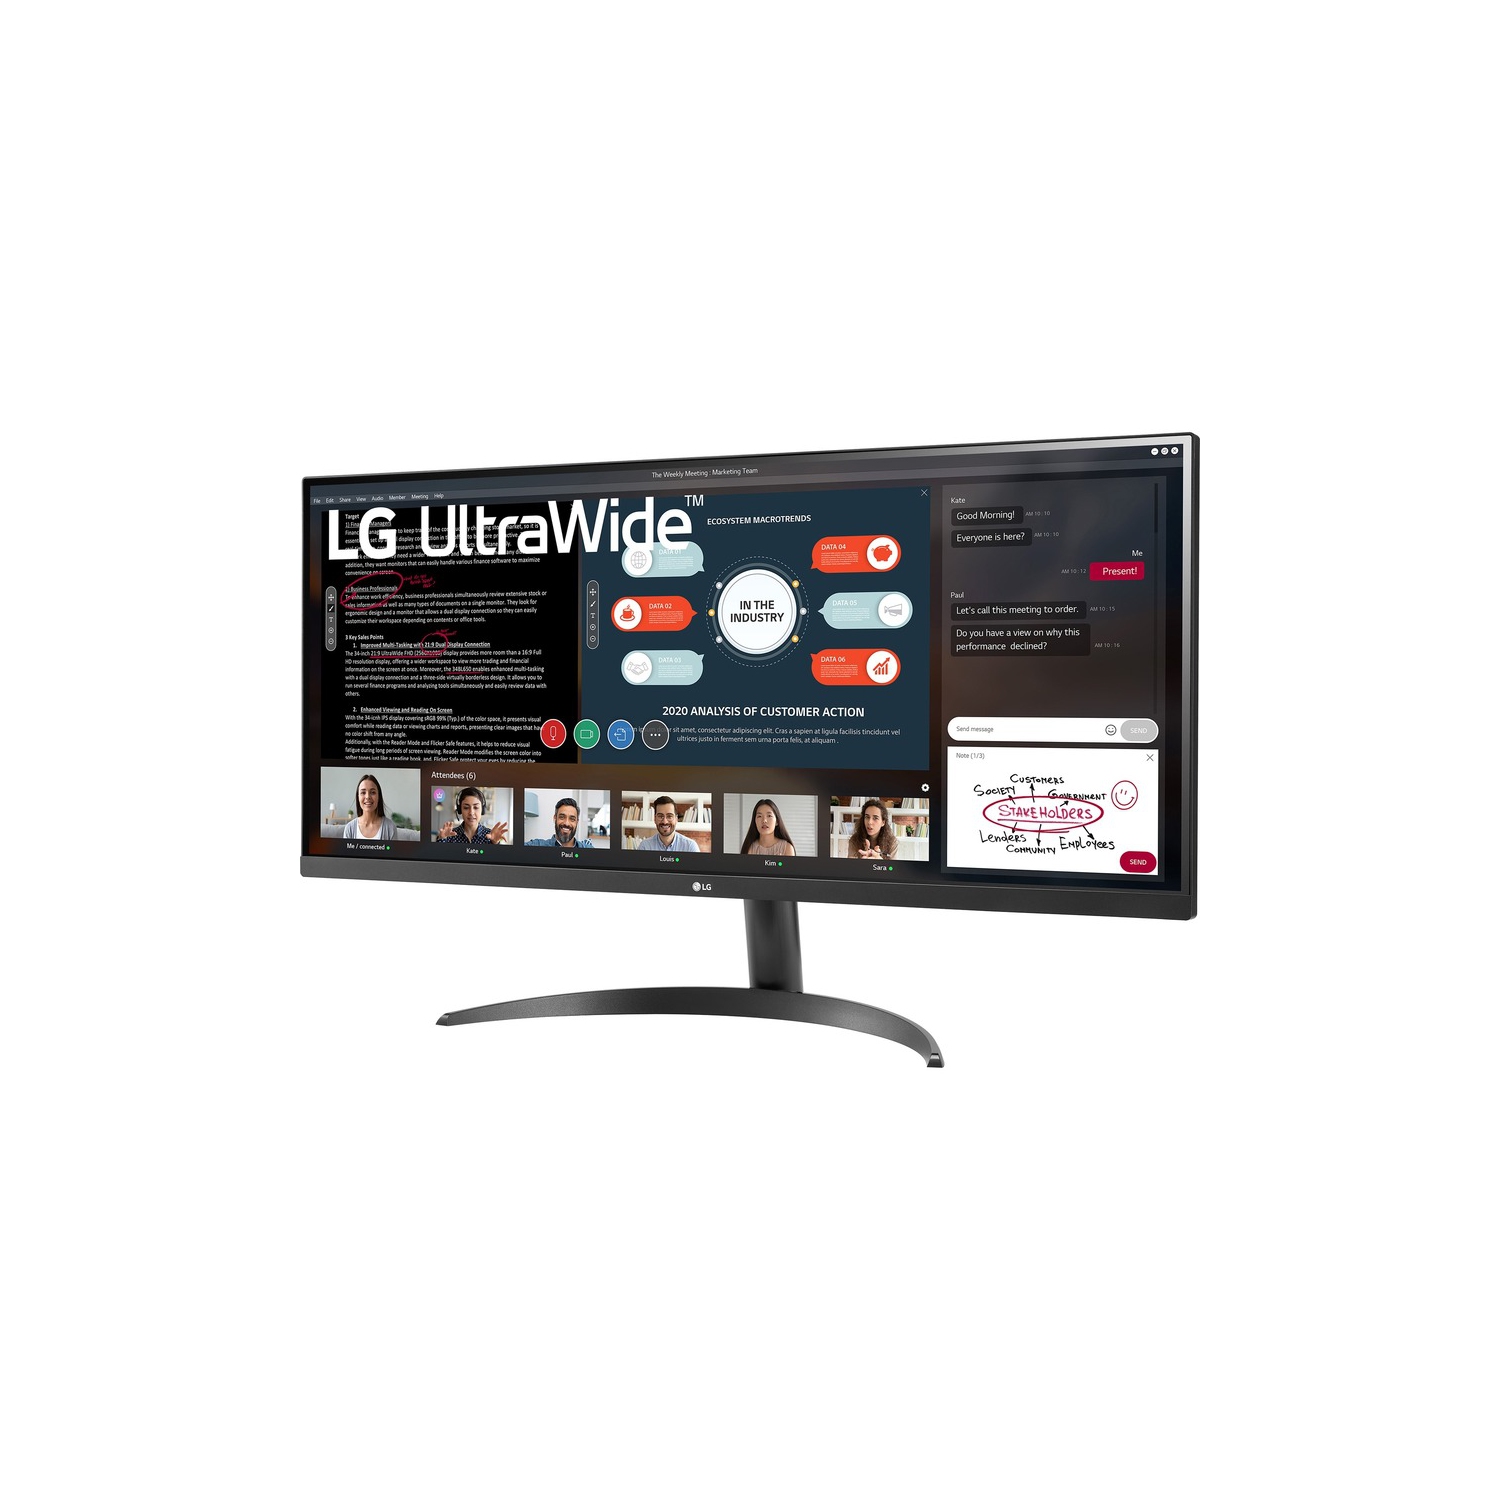 LG 34'' 21:9 UltraWide Full HD IPS Monitor with AMD FreeSync